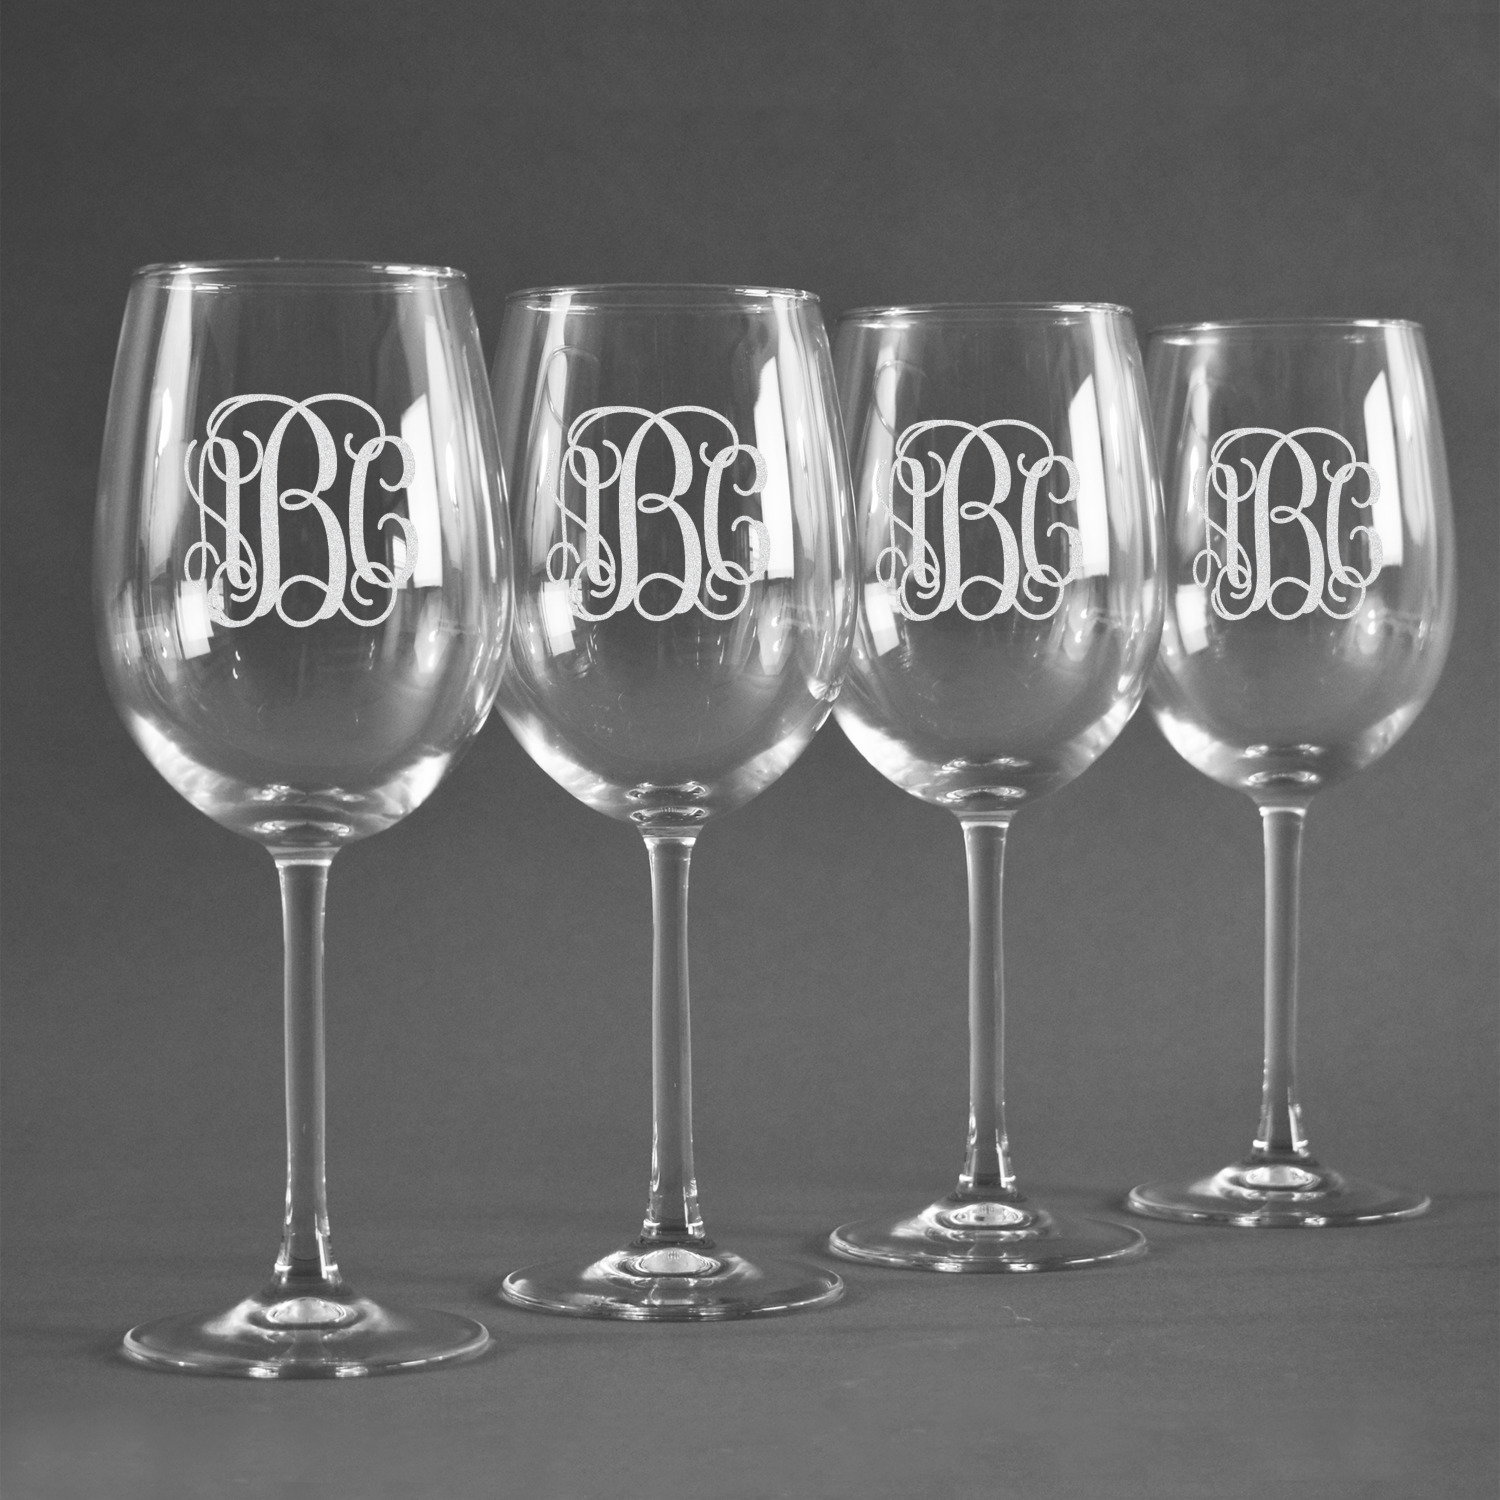 Monogram Wine Glasses Set Of 4 Personalized Youcustomizeit